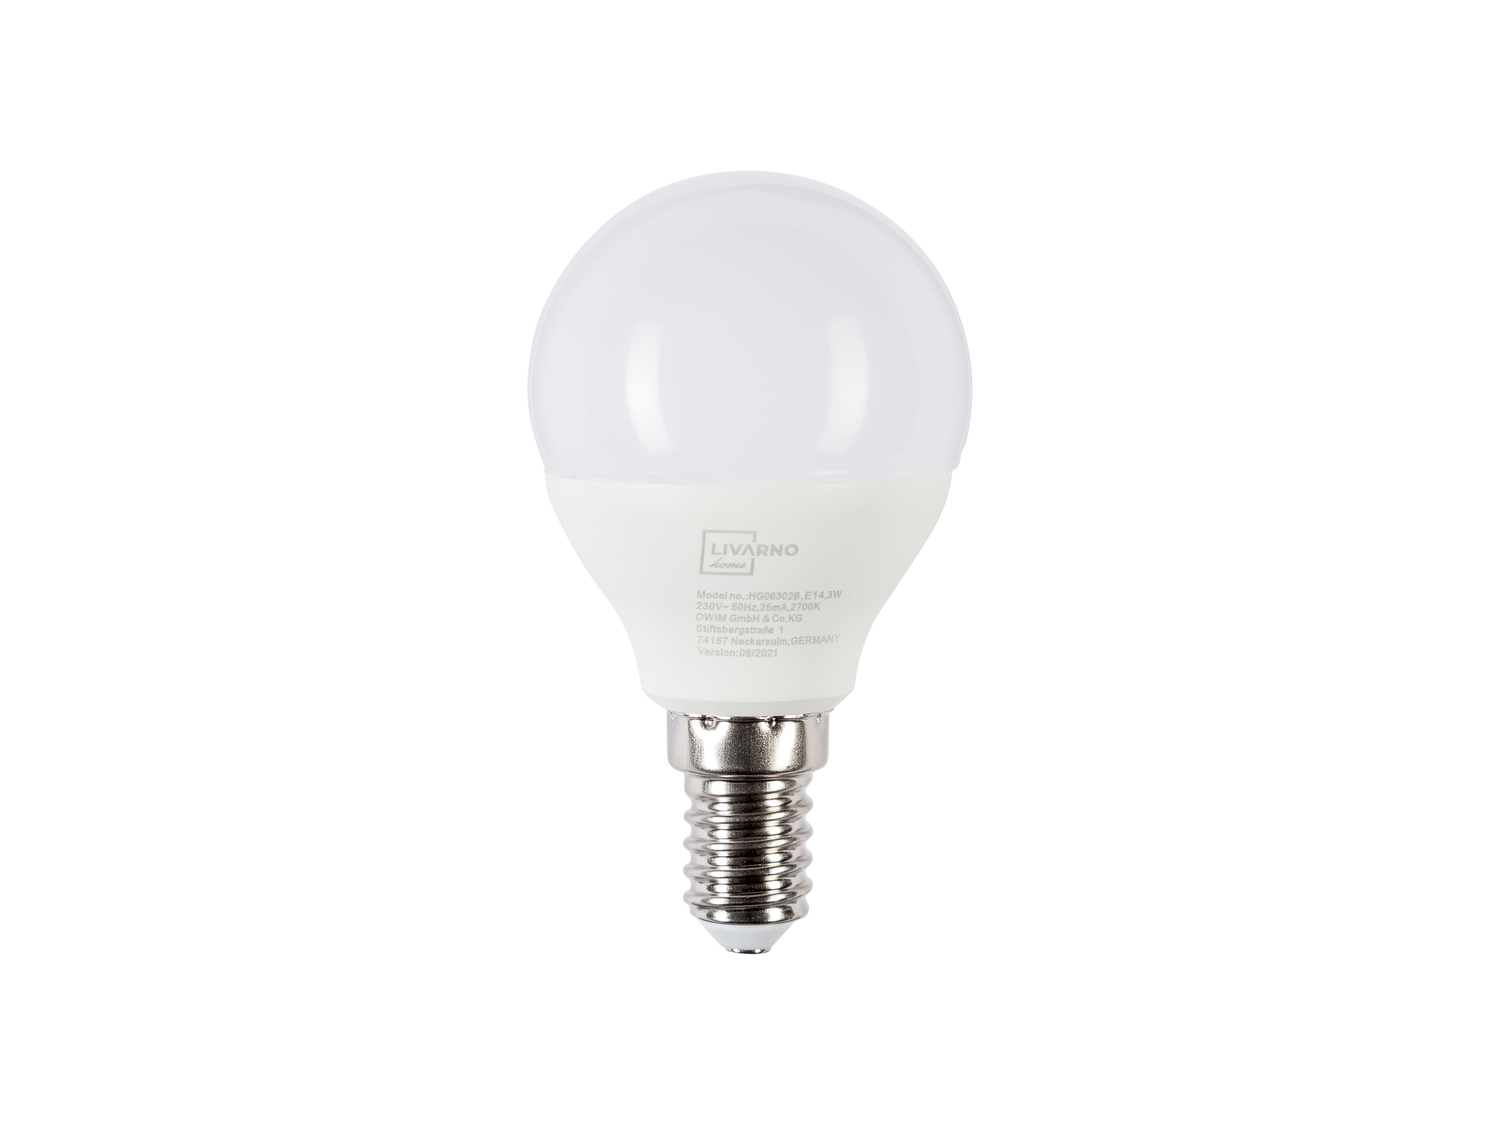 Lampadina LED Livarno, prezzo 1.49 &#8364; 
2,3/3W 
- Bianco caldo 2700 K
- ...